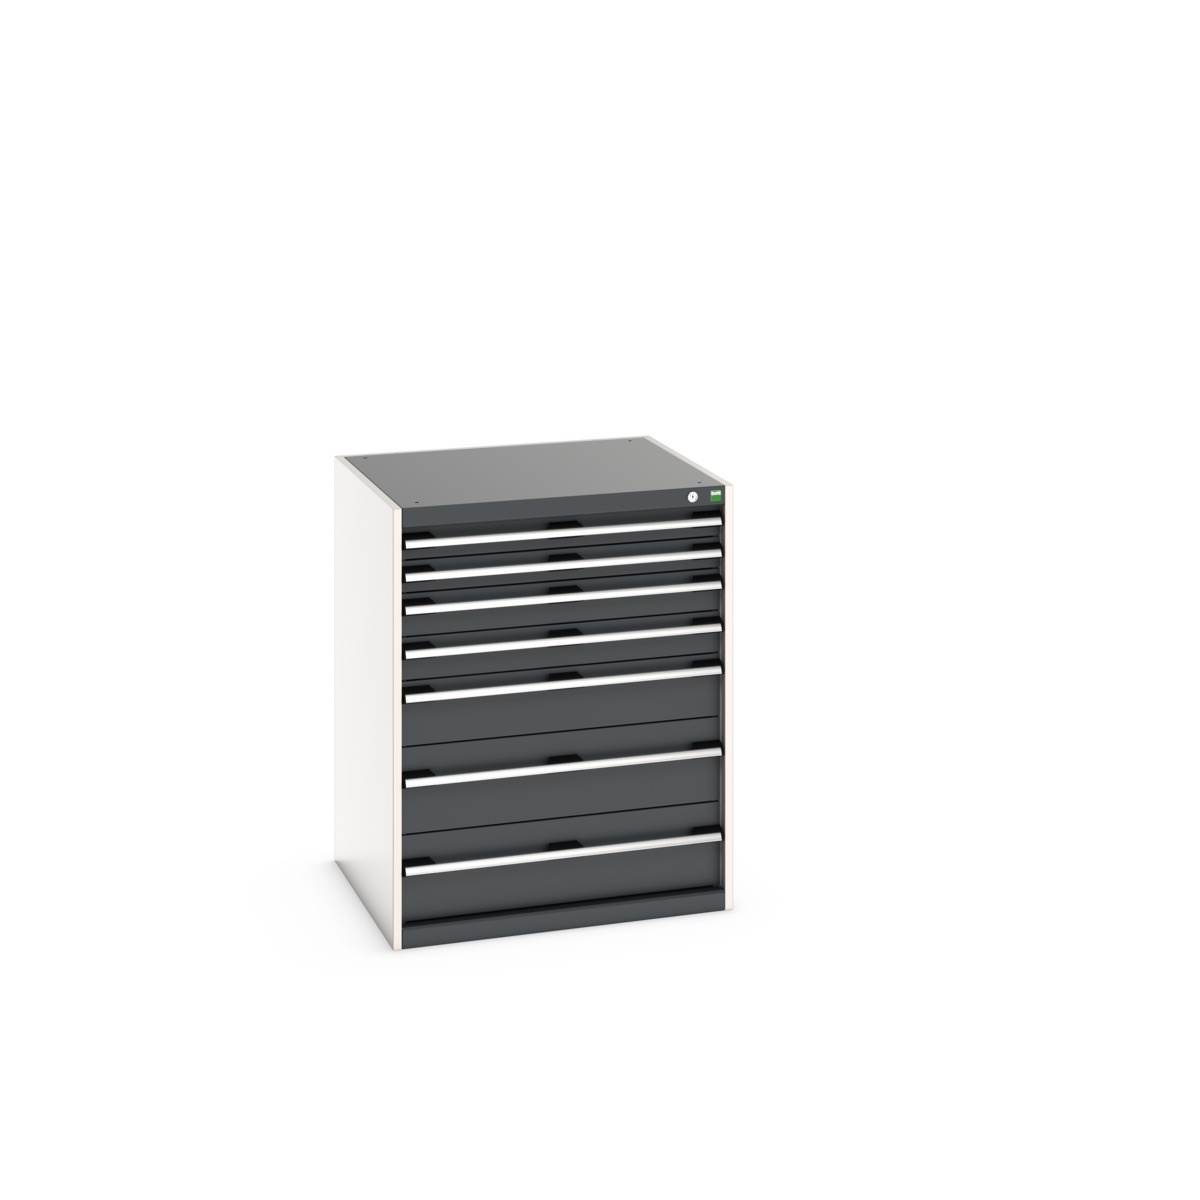 40028023. - cubio drawer cabinet 